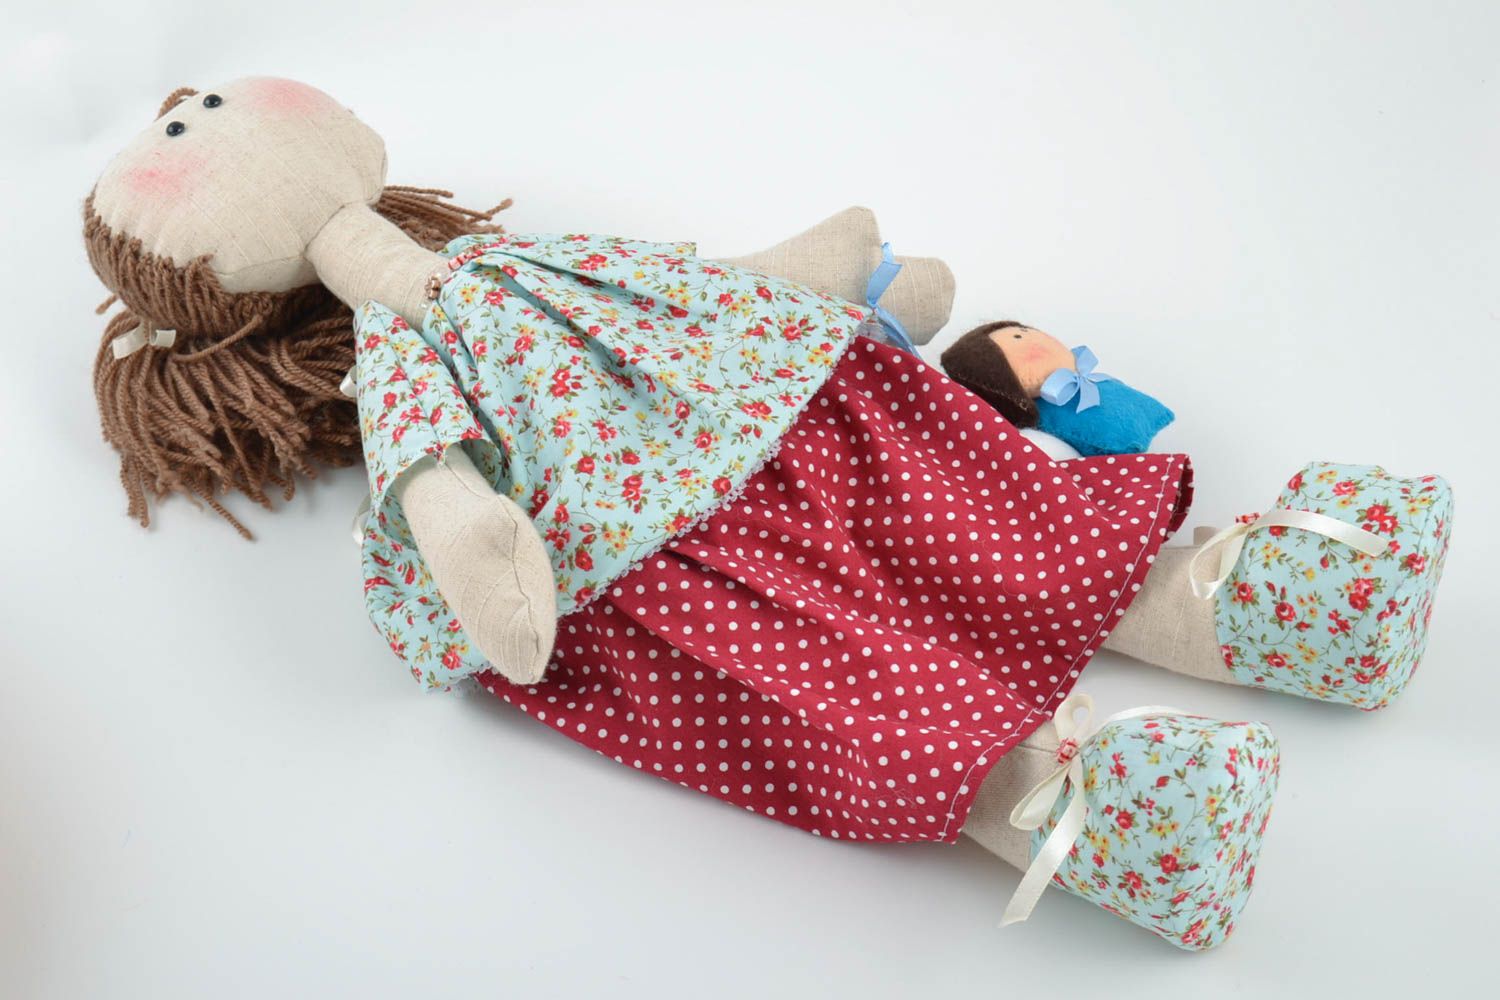 Unusual beautiful handmade fabric soft doll for children and interior decor photo 5